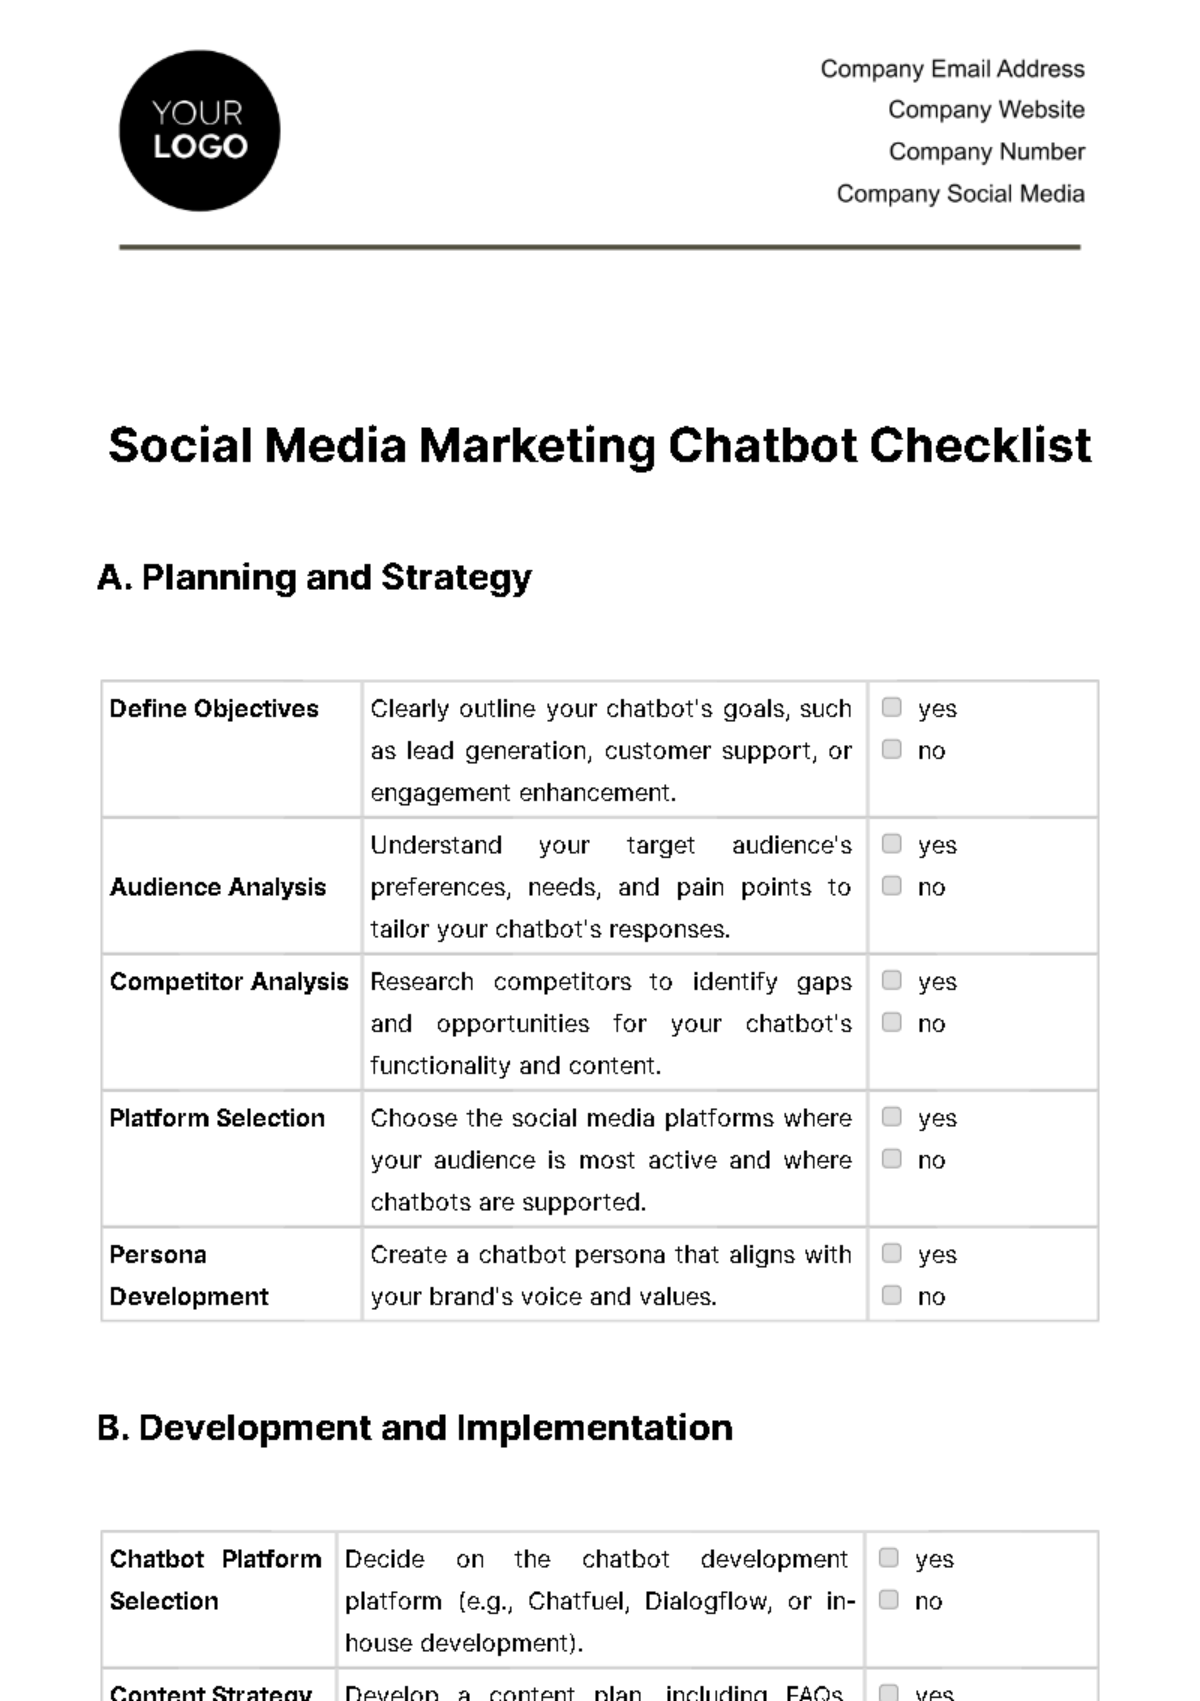 Free Social Media Marketing Chatbot Checklist Template